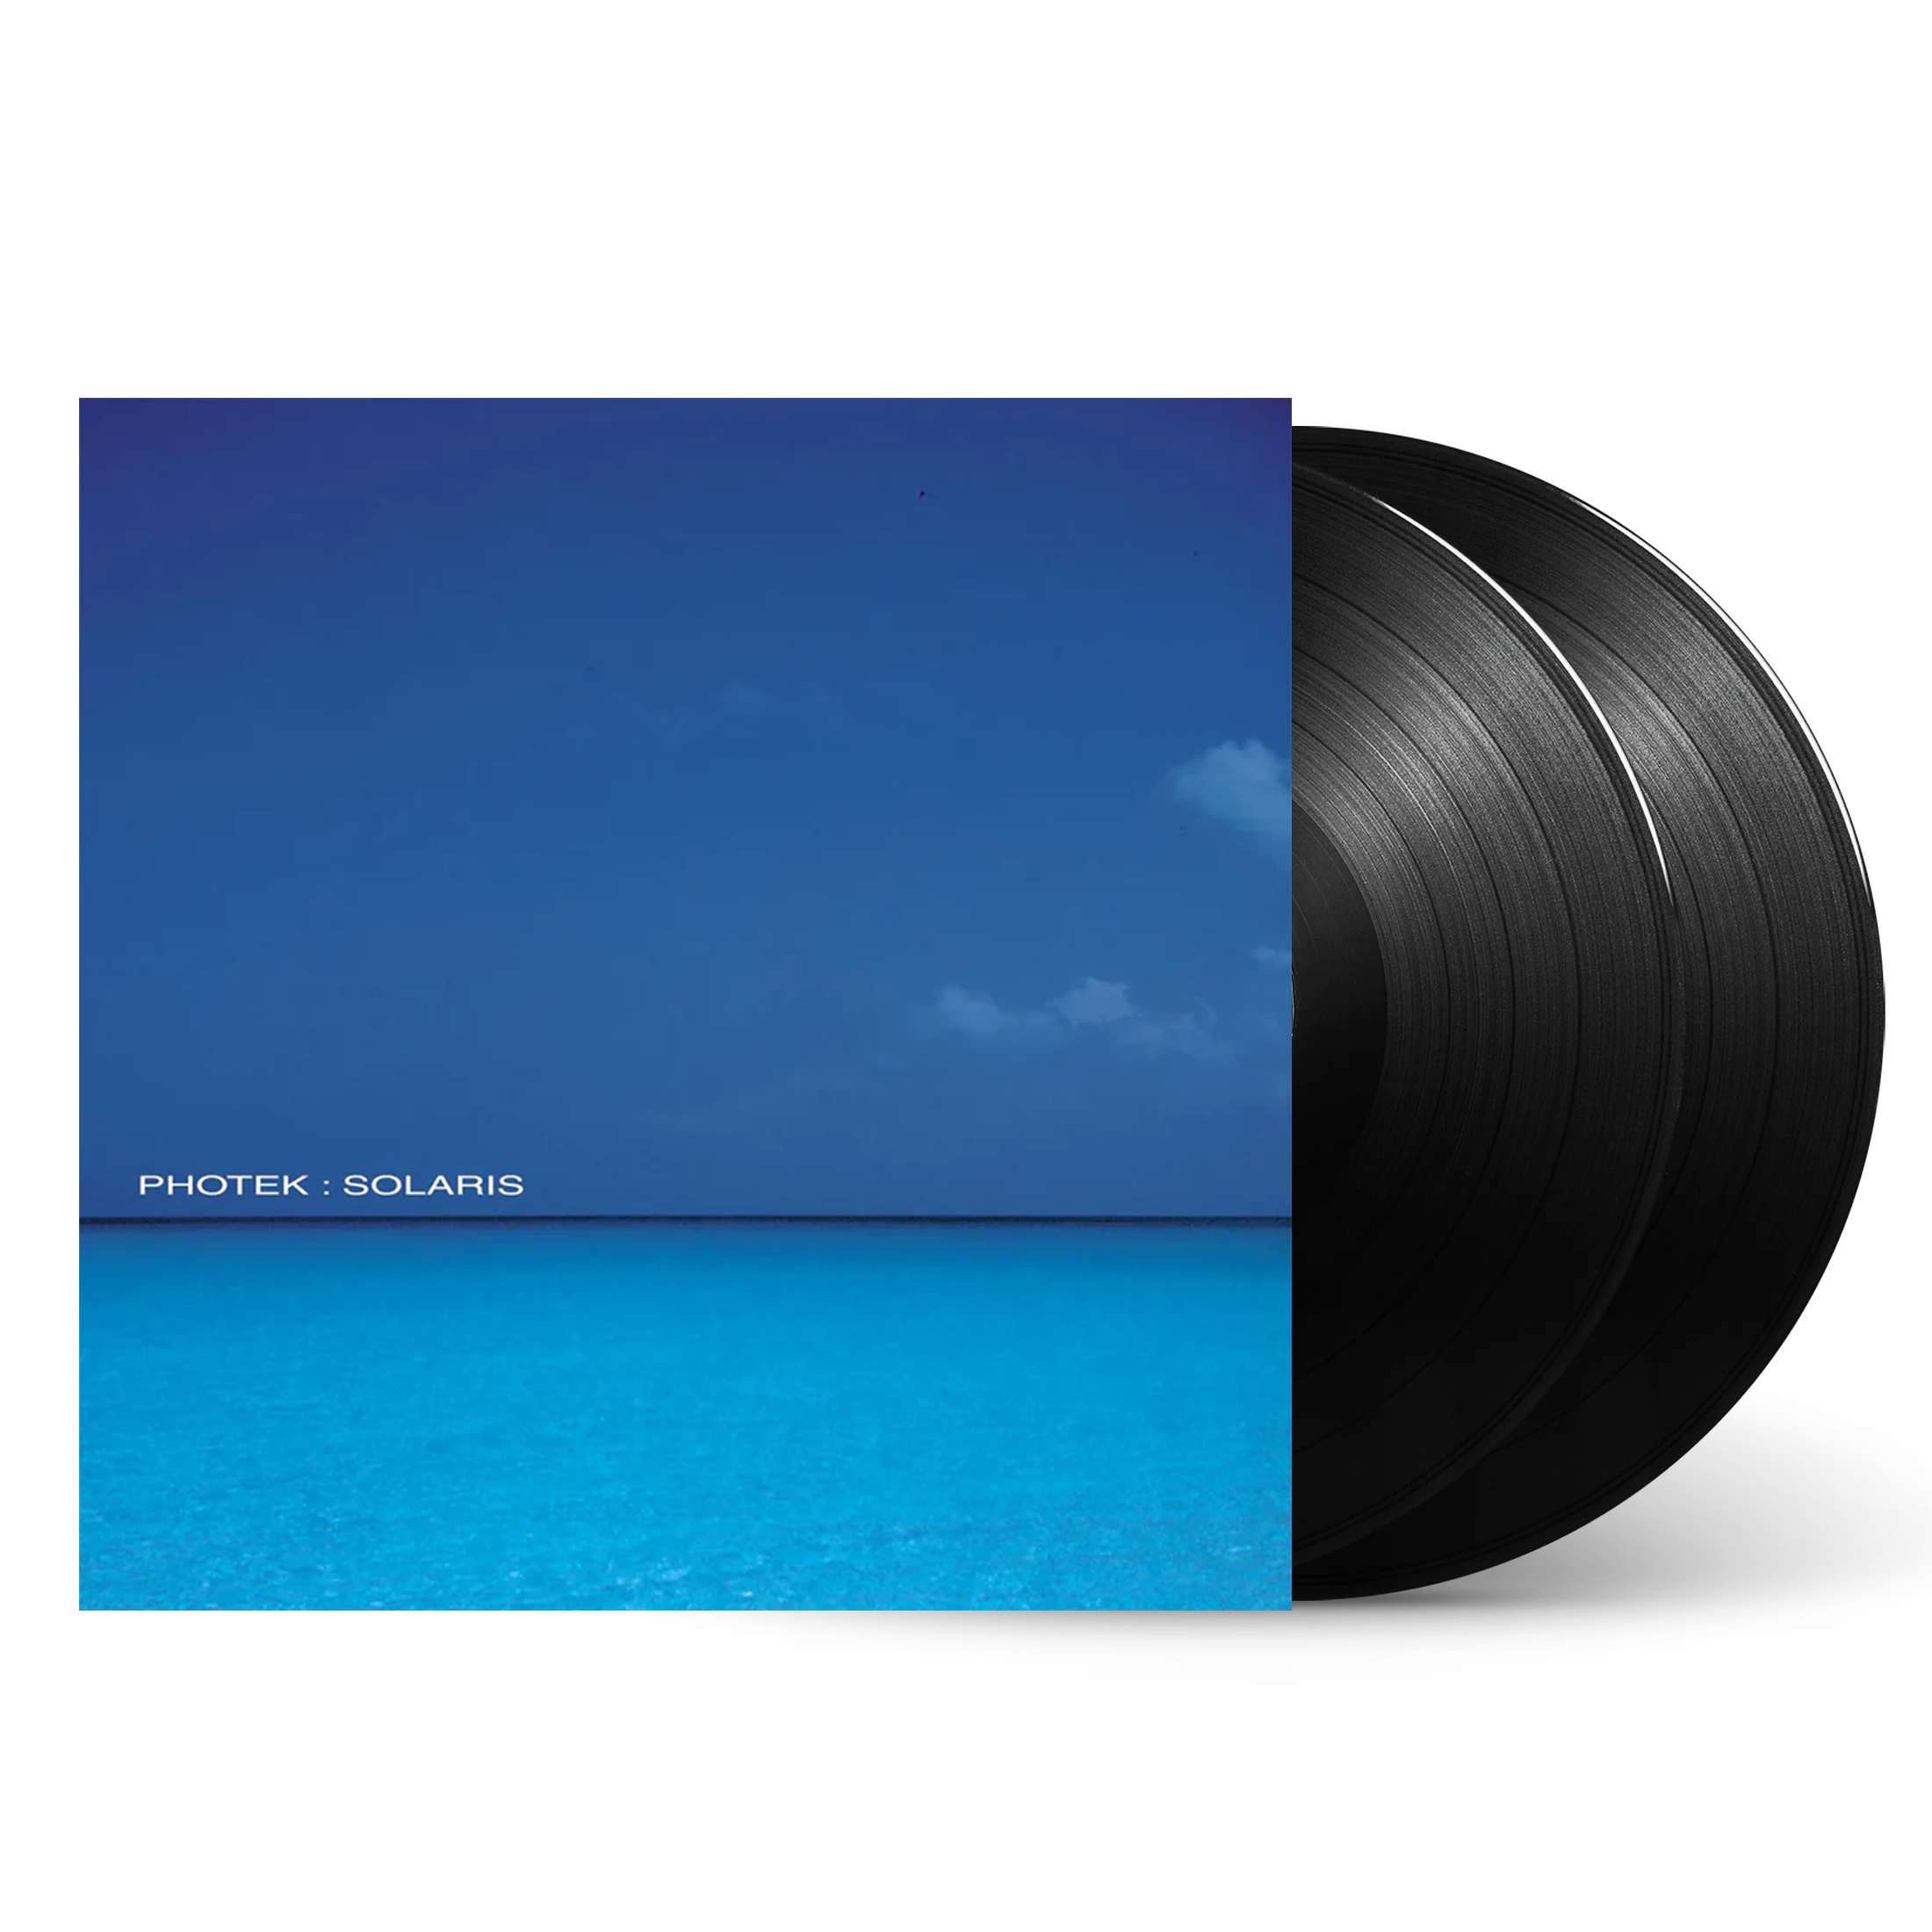 Photek - Solaris: Vinyl 2LP